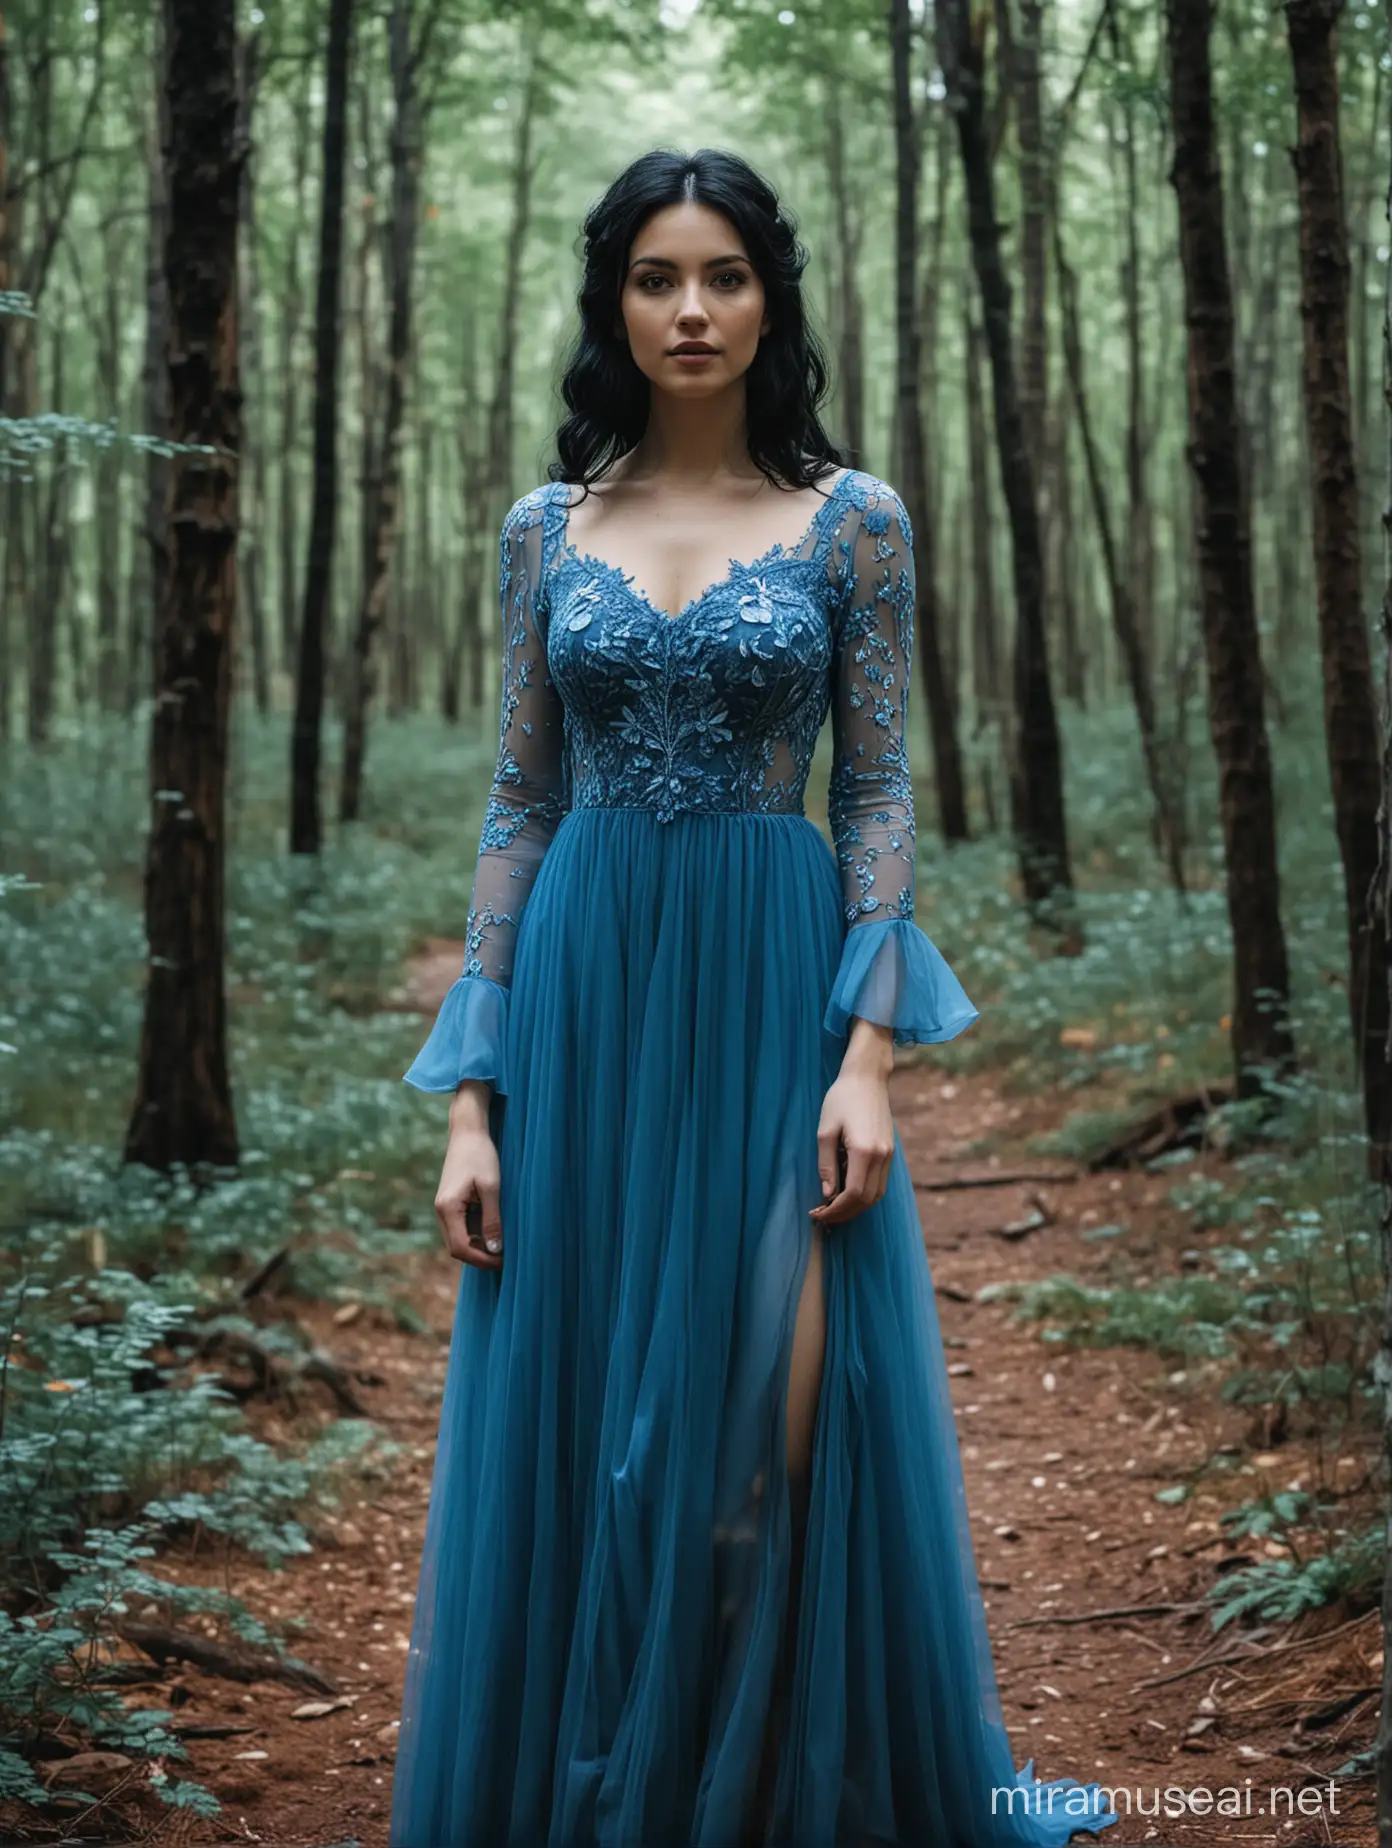 Elegant Woman in Blue Dress Amid Enchanting Forest